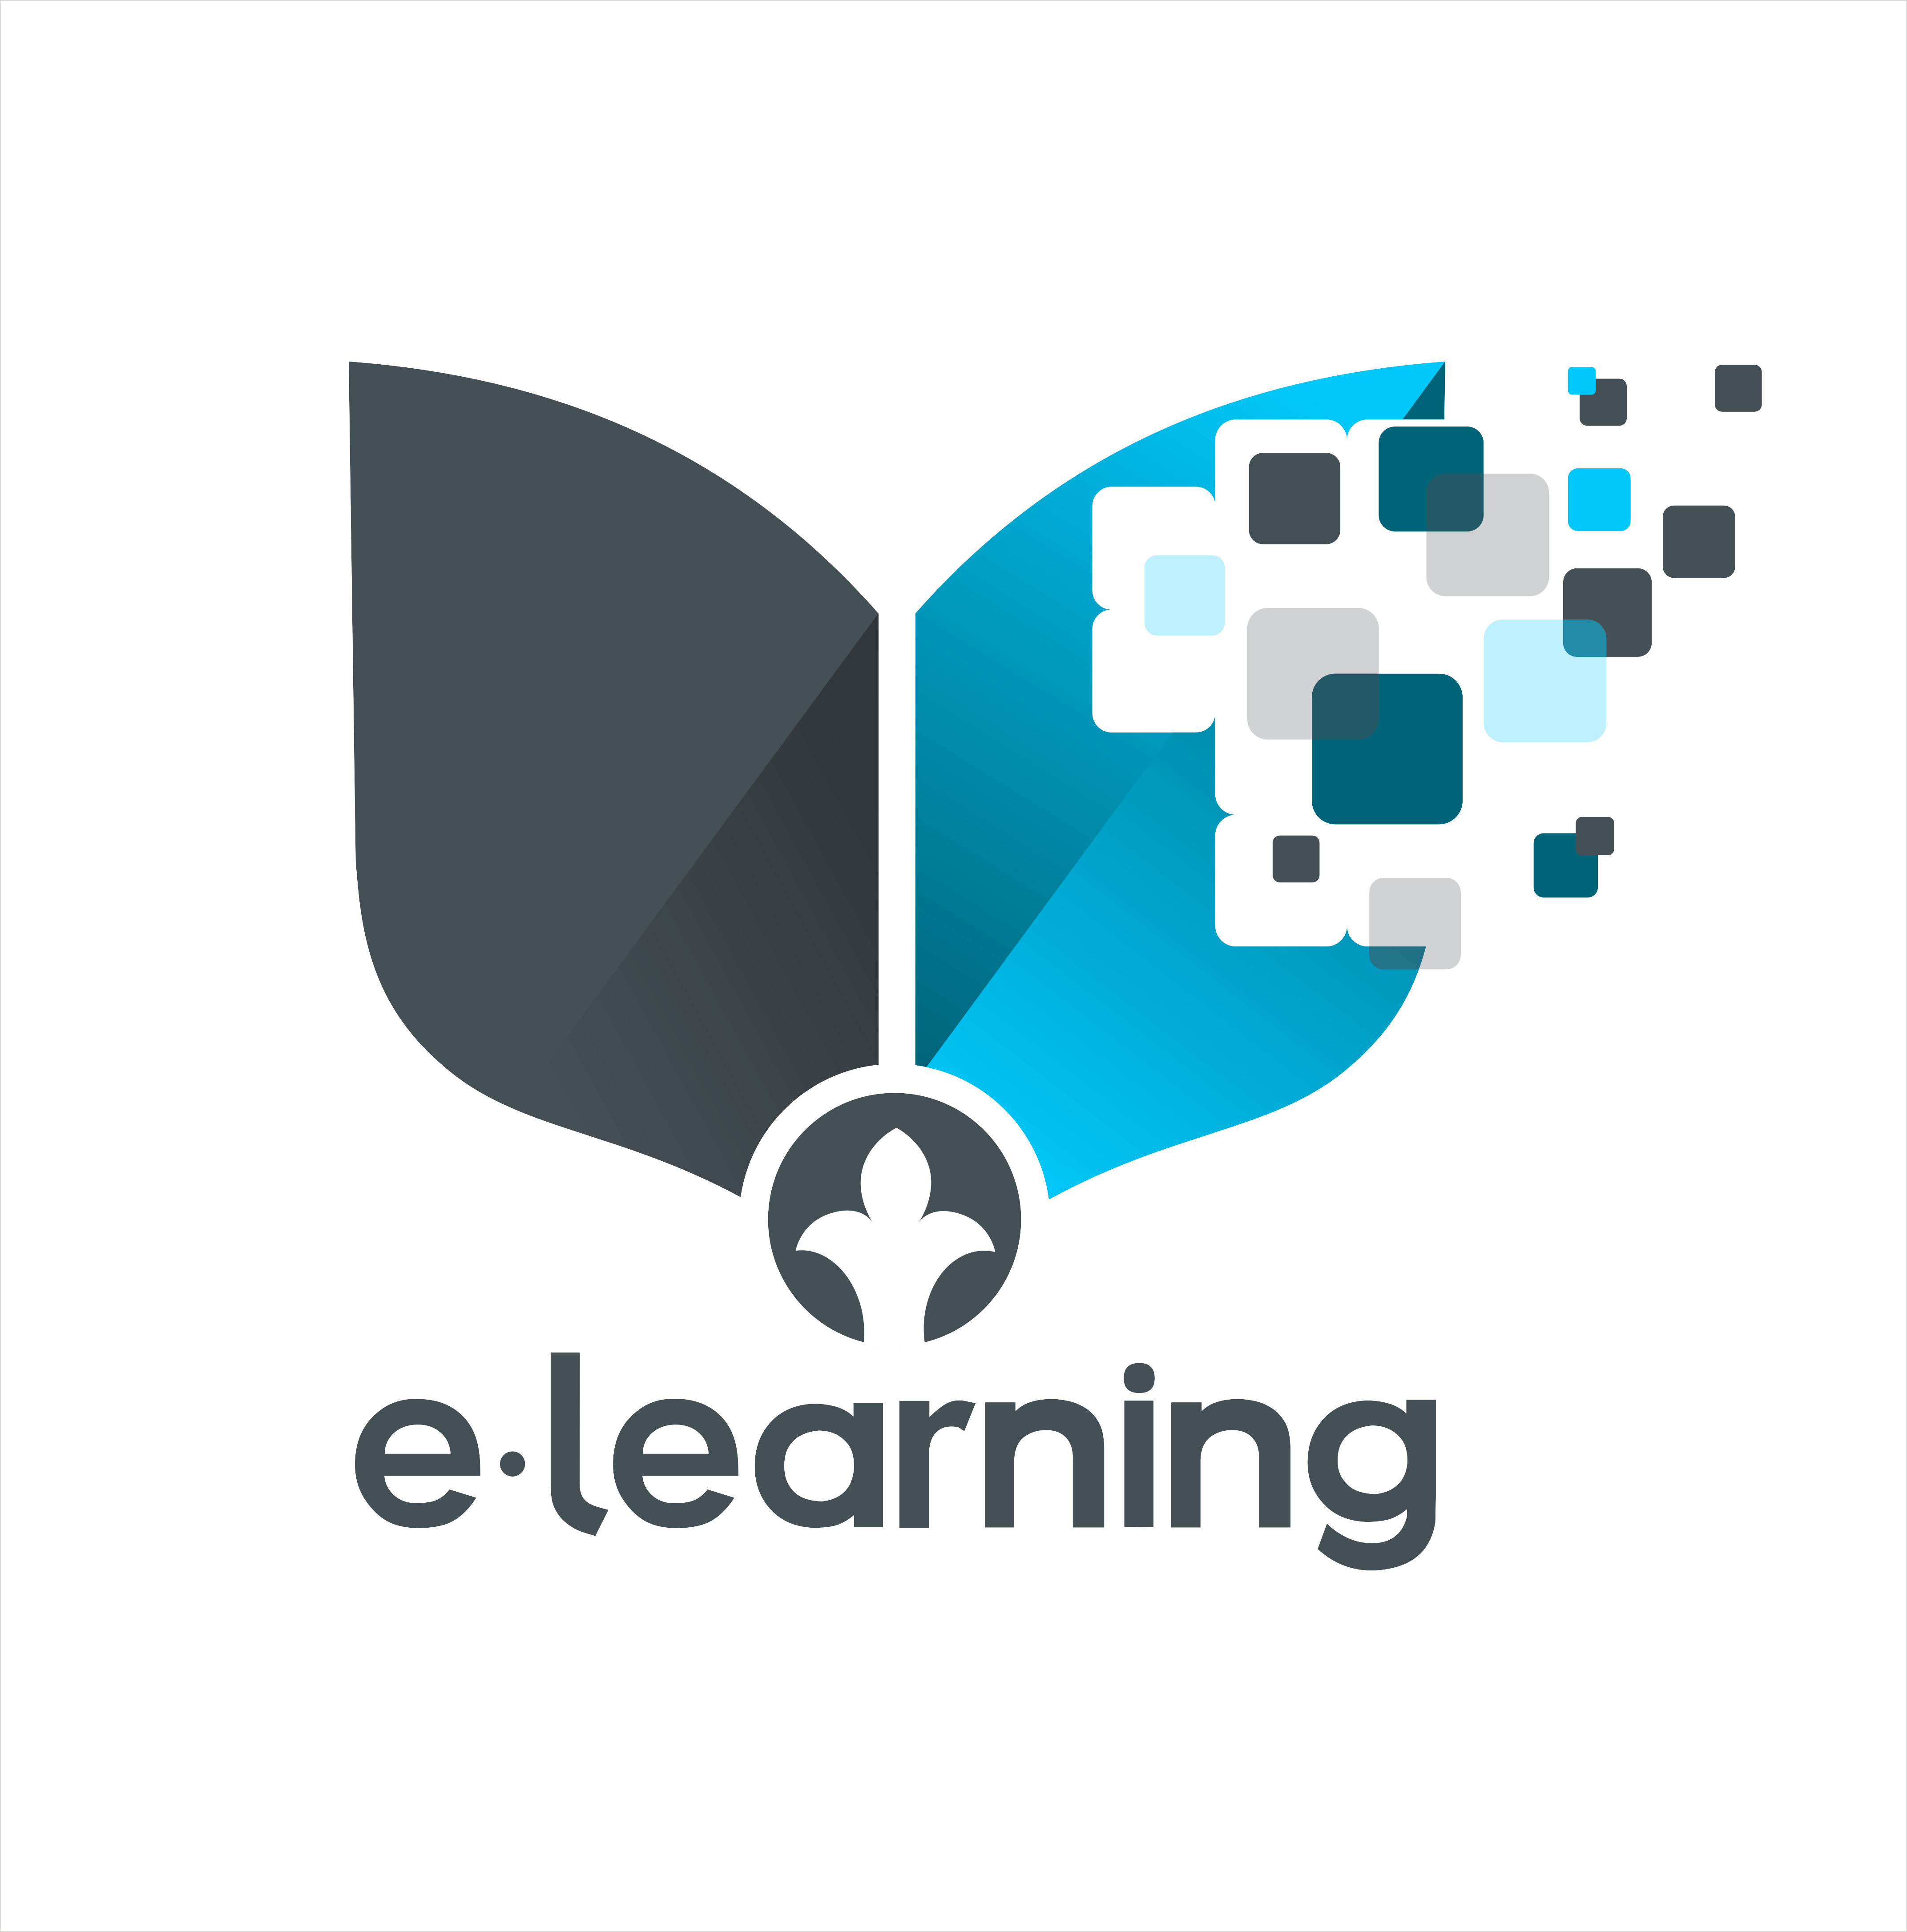 eLearning Logo - Learning Logos